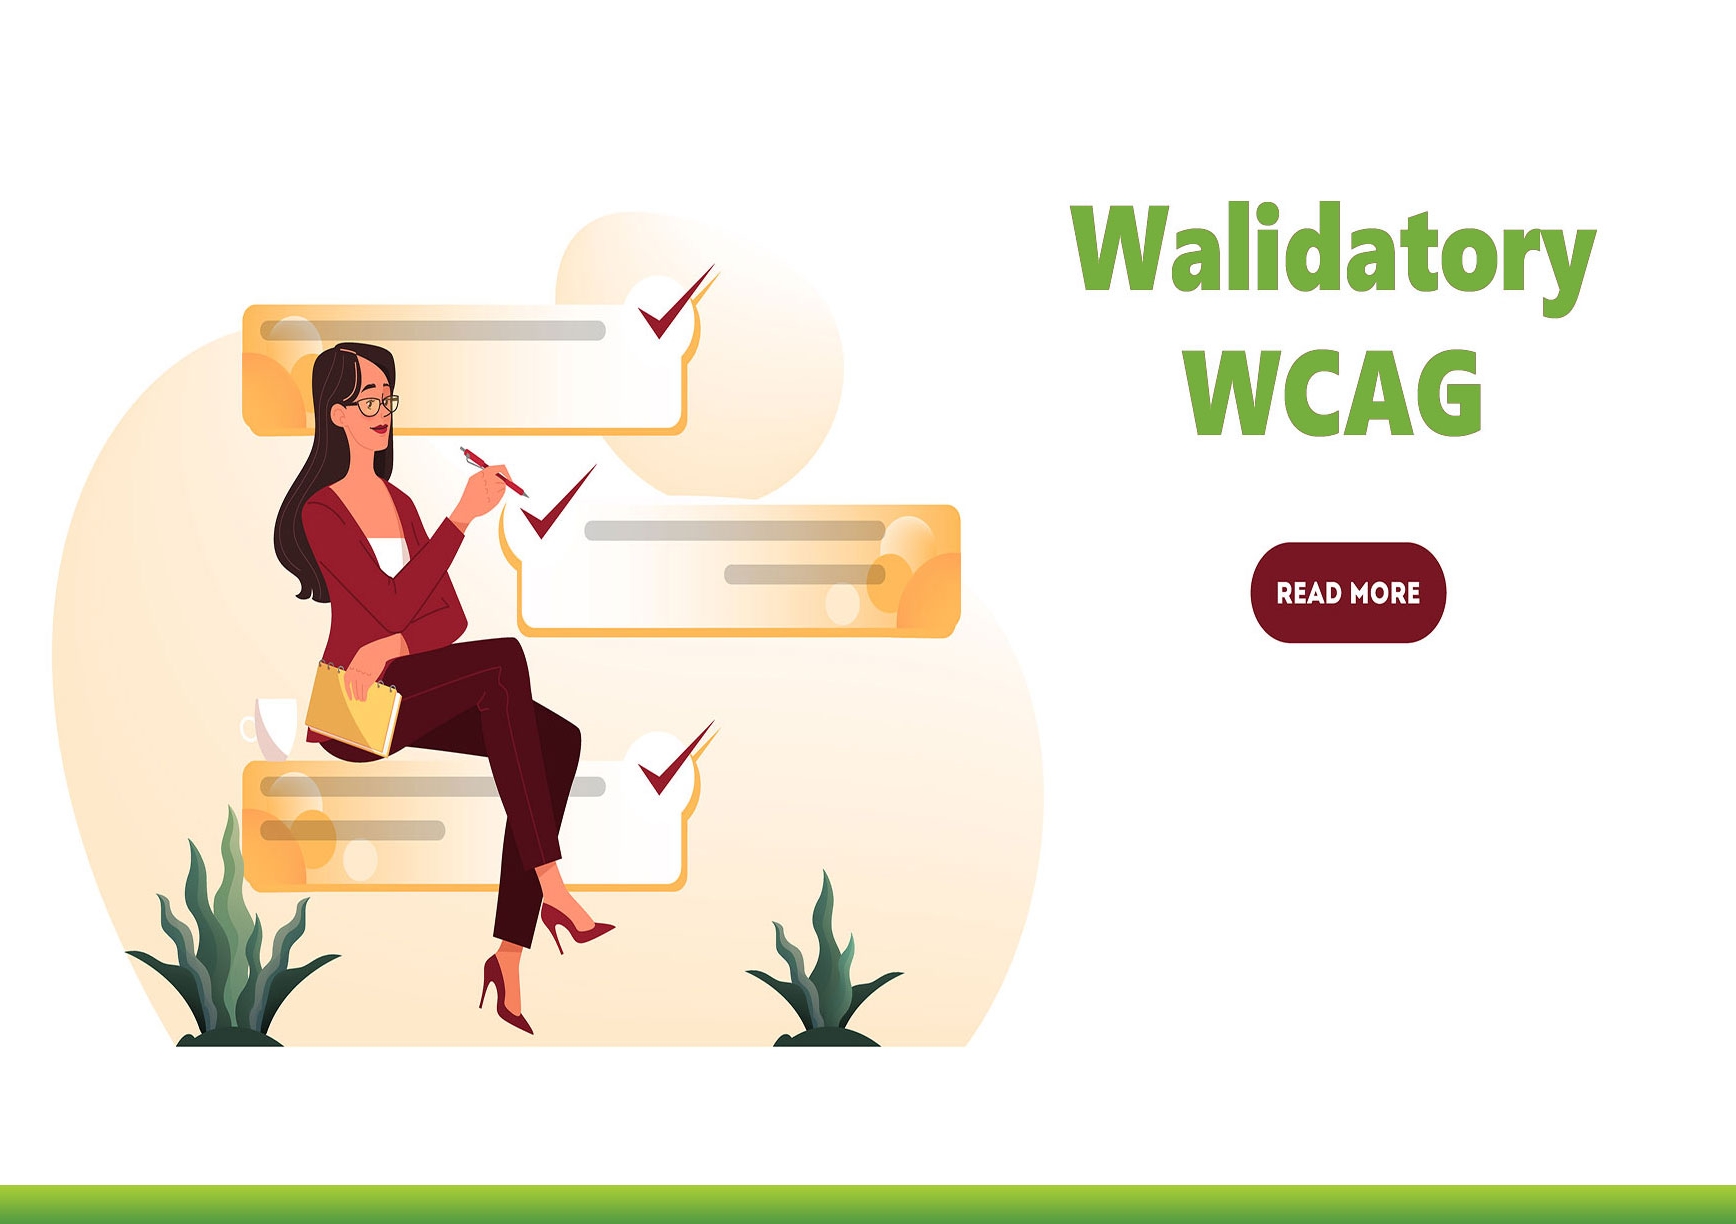 Walidatory WCAG